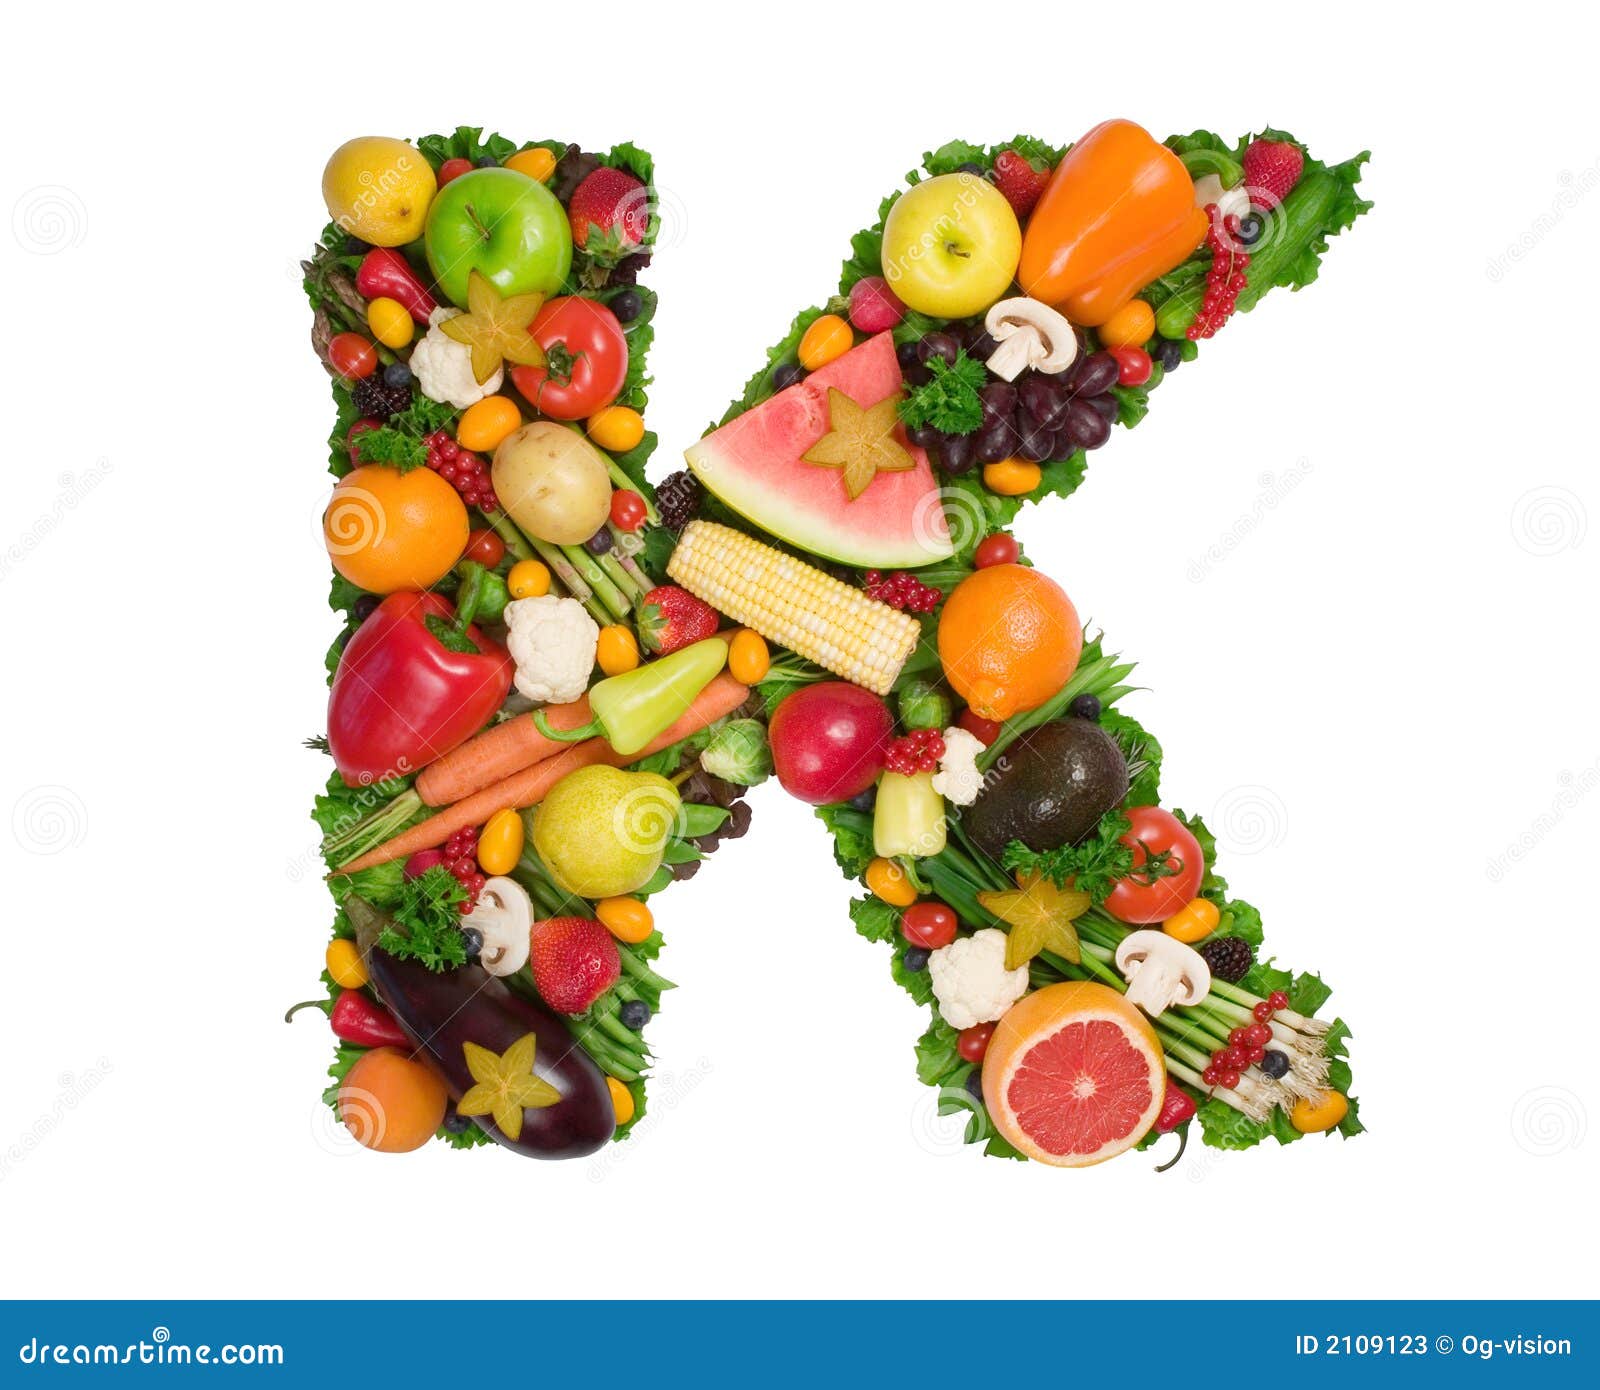 Витамин б фрукты овощи. Что такое витамины. Витамин k. Витамины из фруктов. Витами из фруктов и овощей.